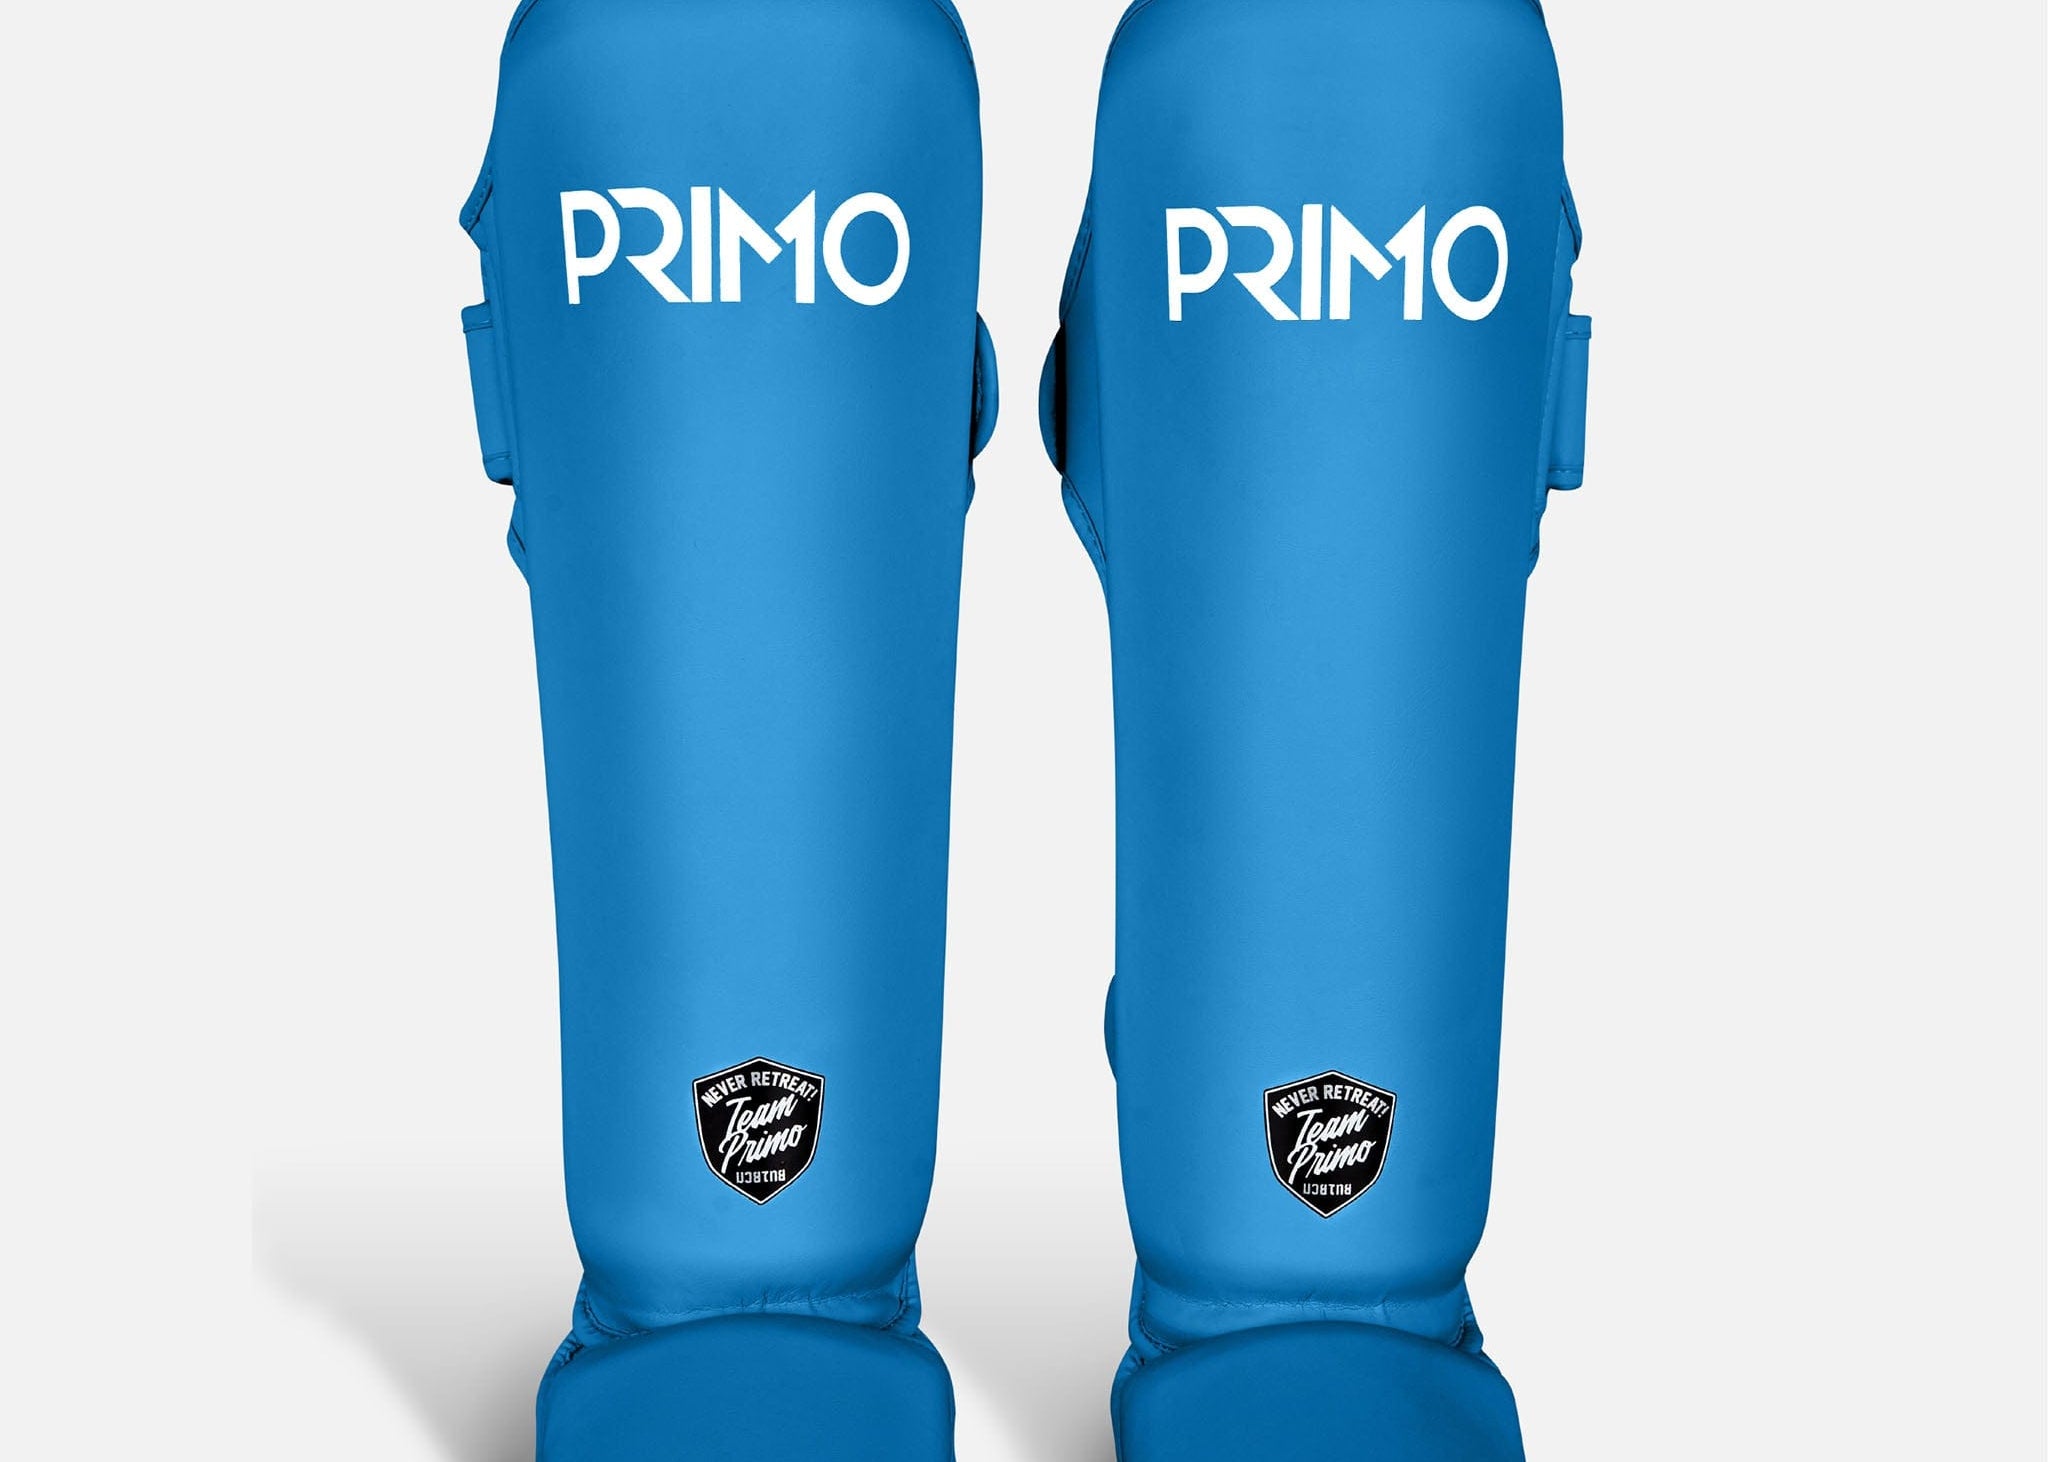 Primo Fight Wear Official Classic Muay Thai Shinguard - Blue